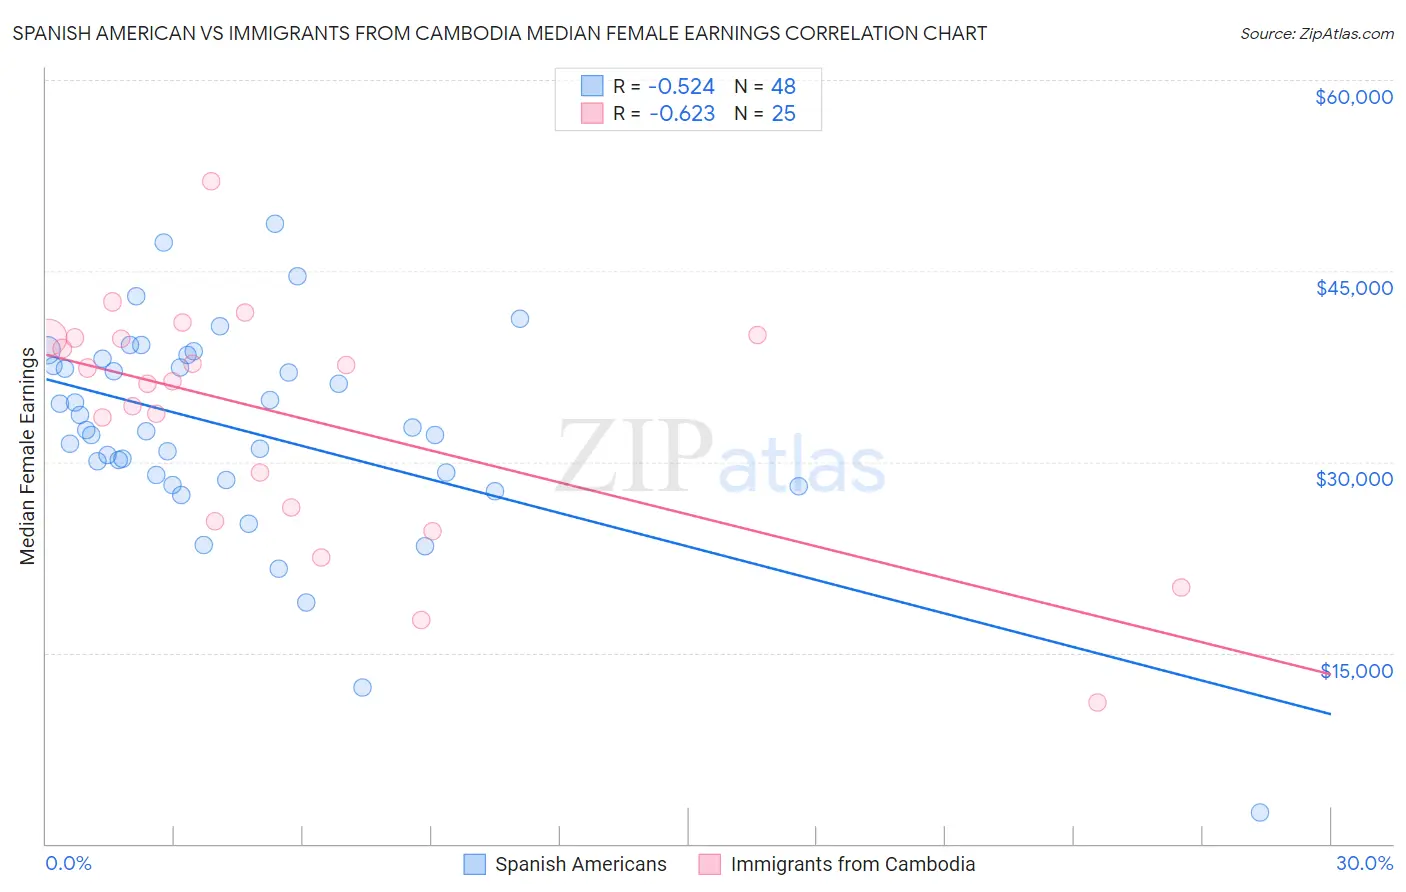 Spanish American vs Immigrants from Cambodia Median Female Earnings